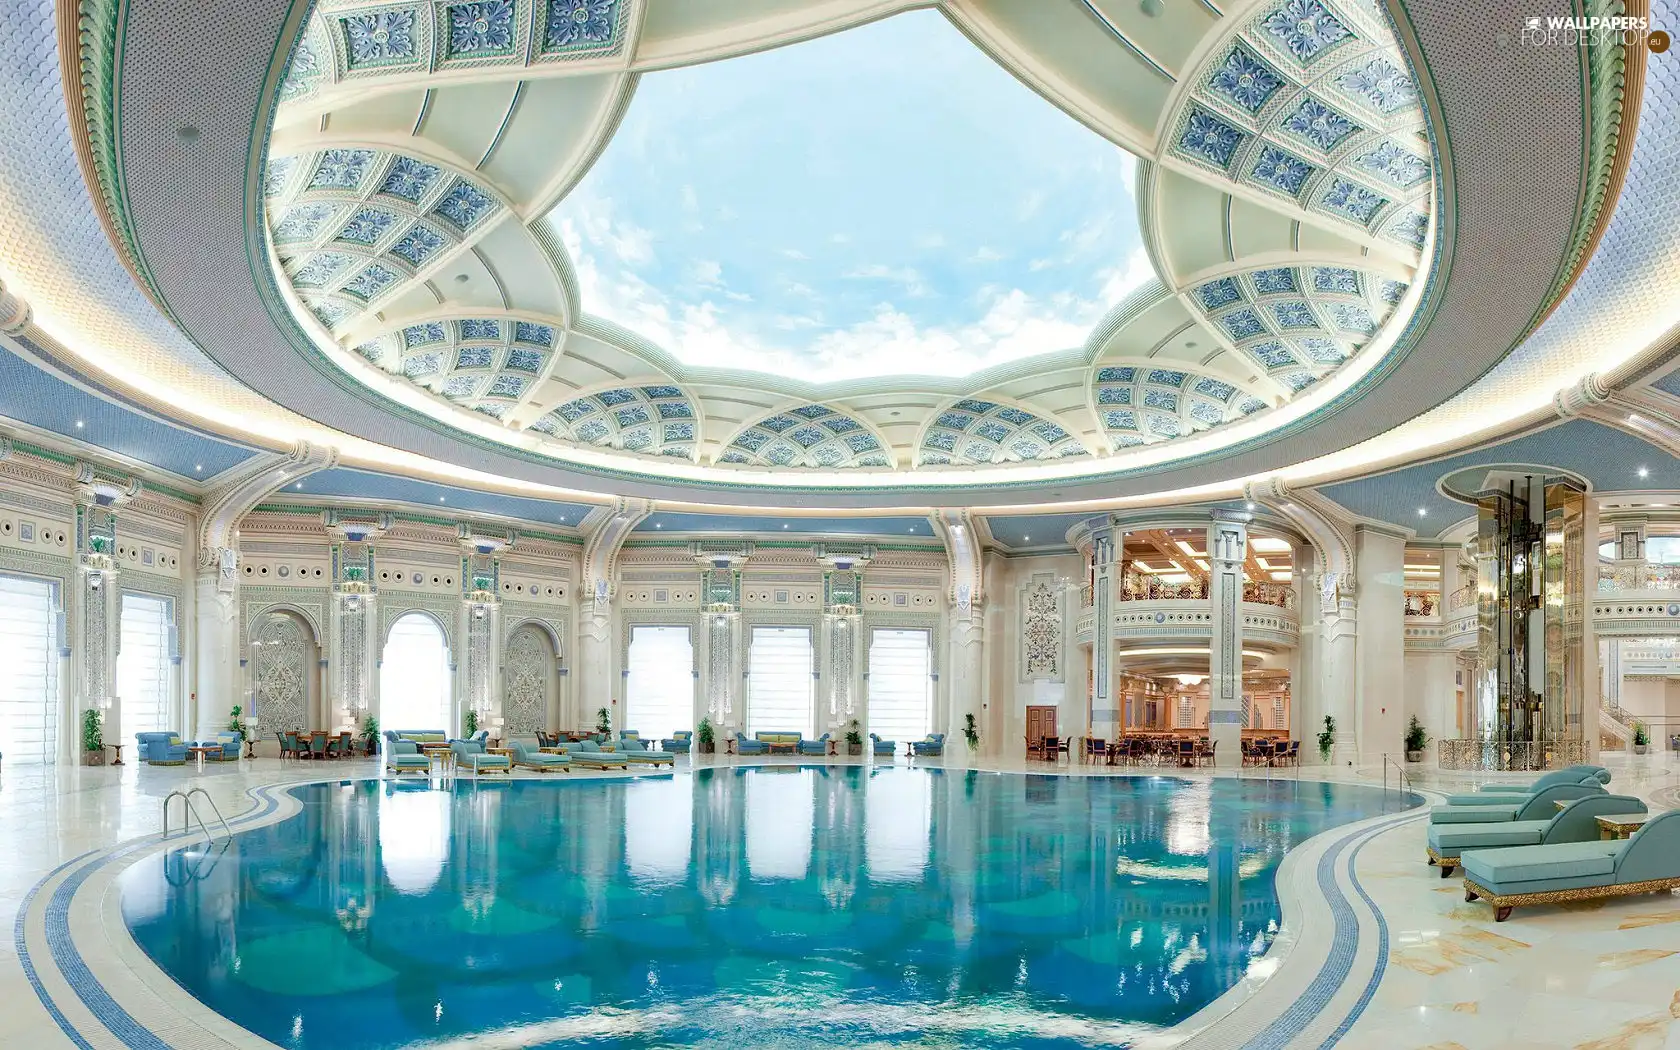 Hotel hall, Pool, inside, interior